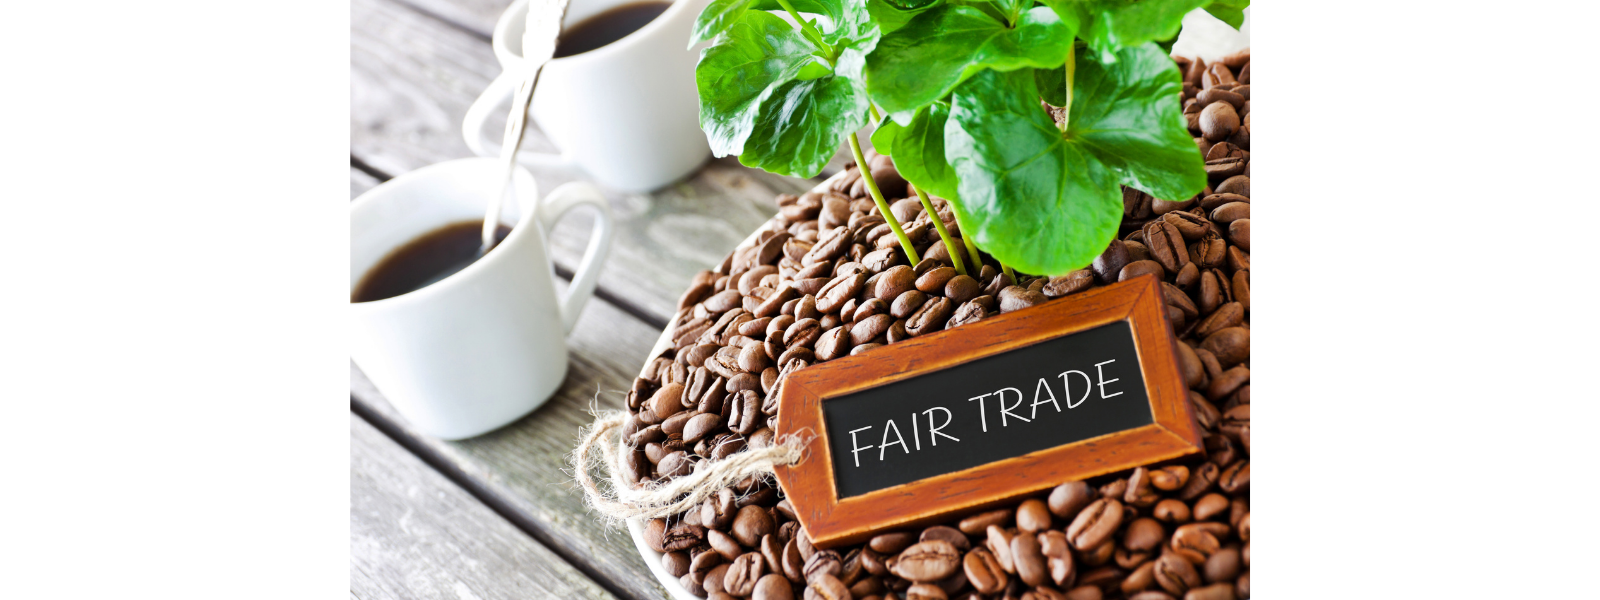 fair trade coffee and coffee beans